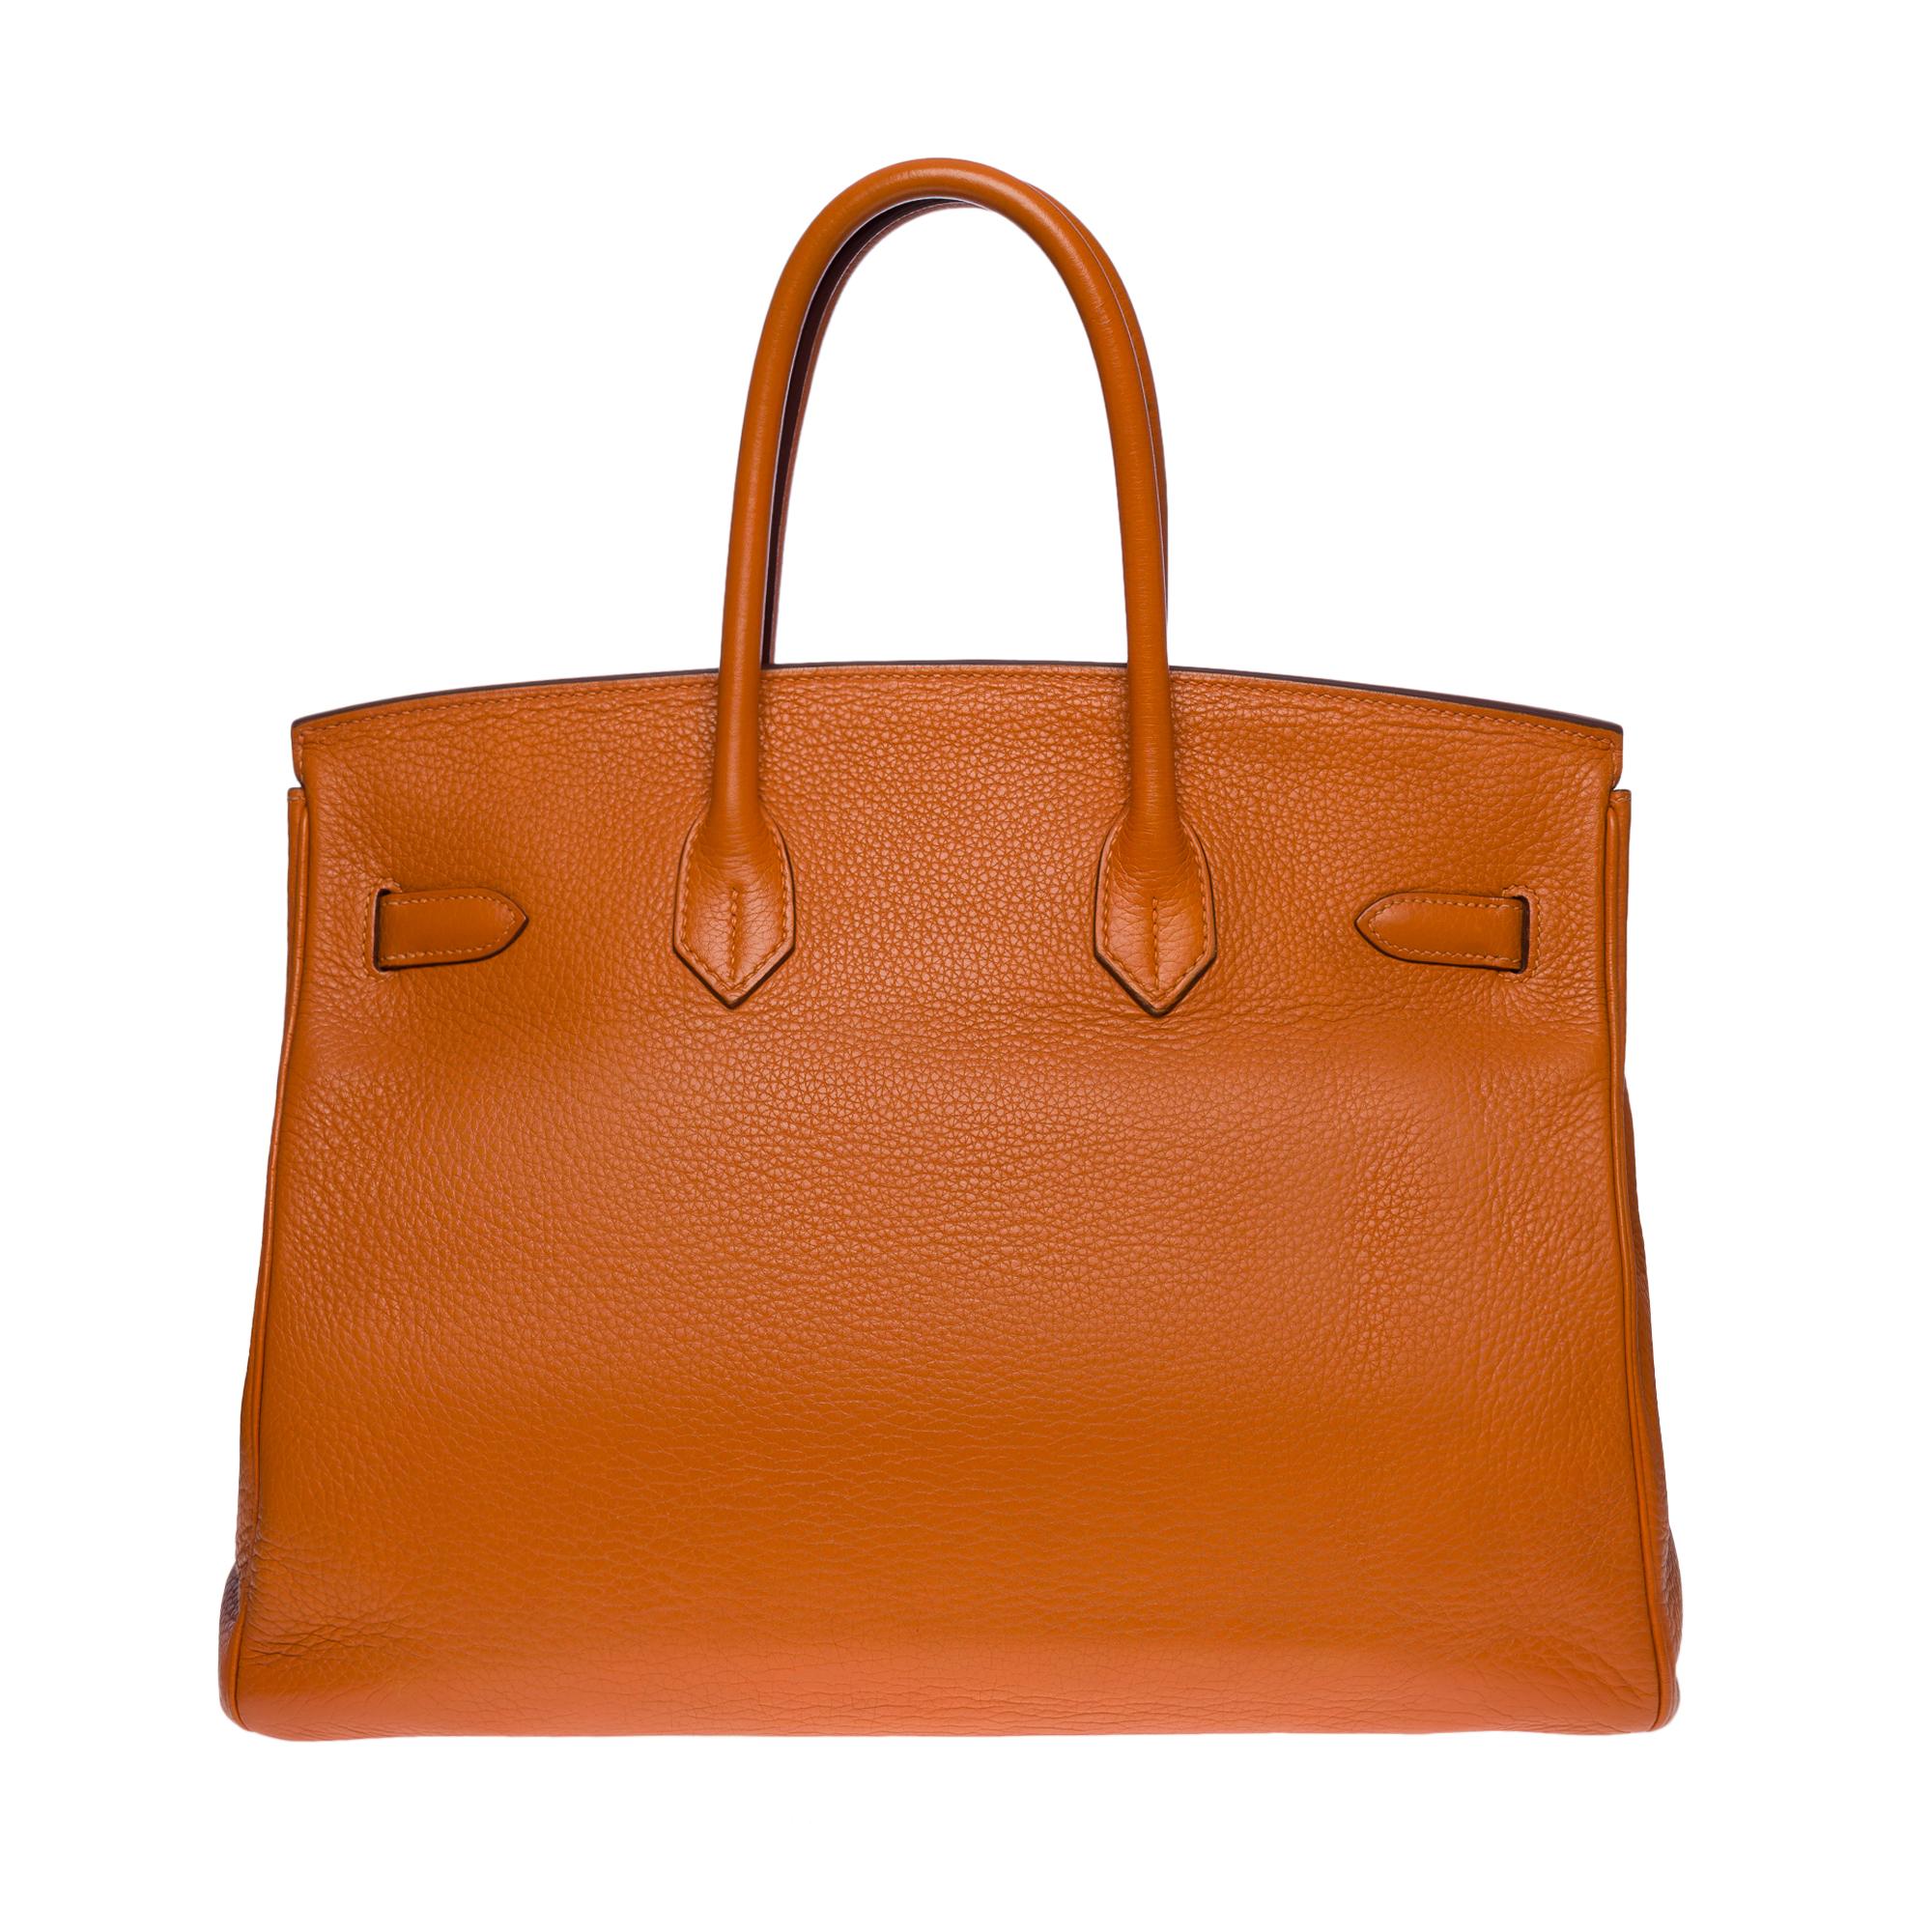 hermes birkin bag 35 togo orange women's handbag